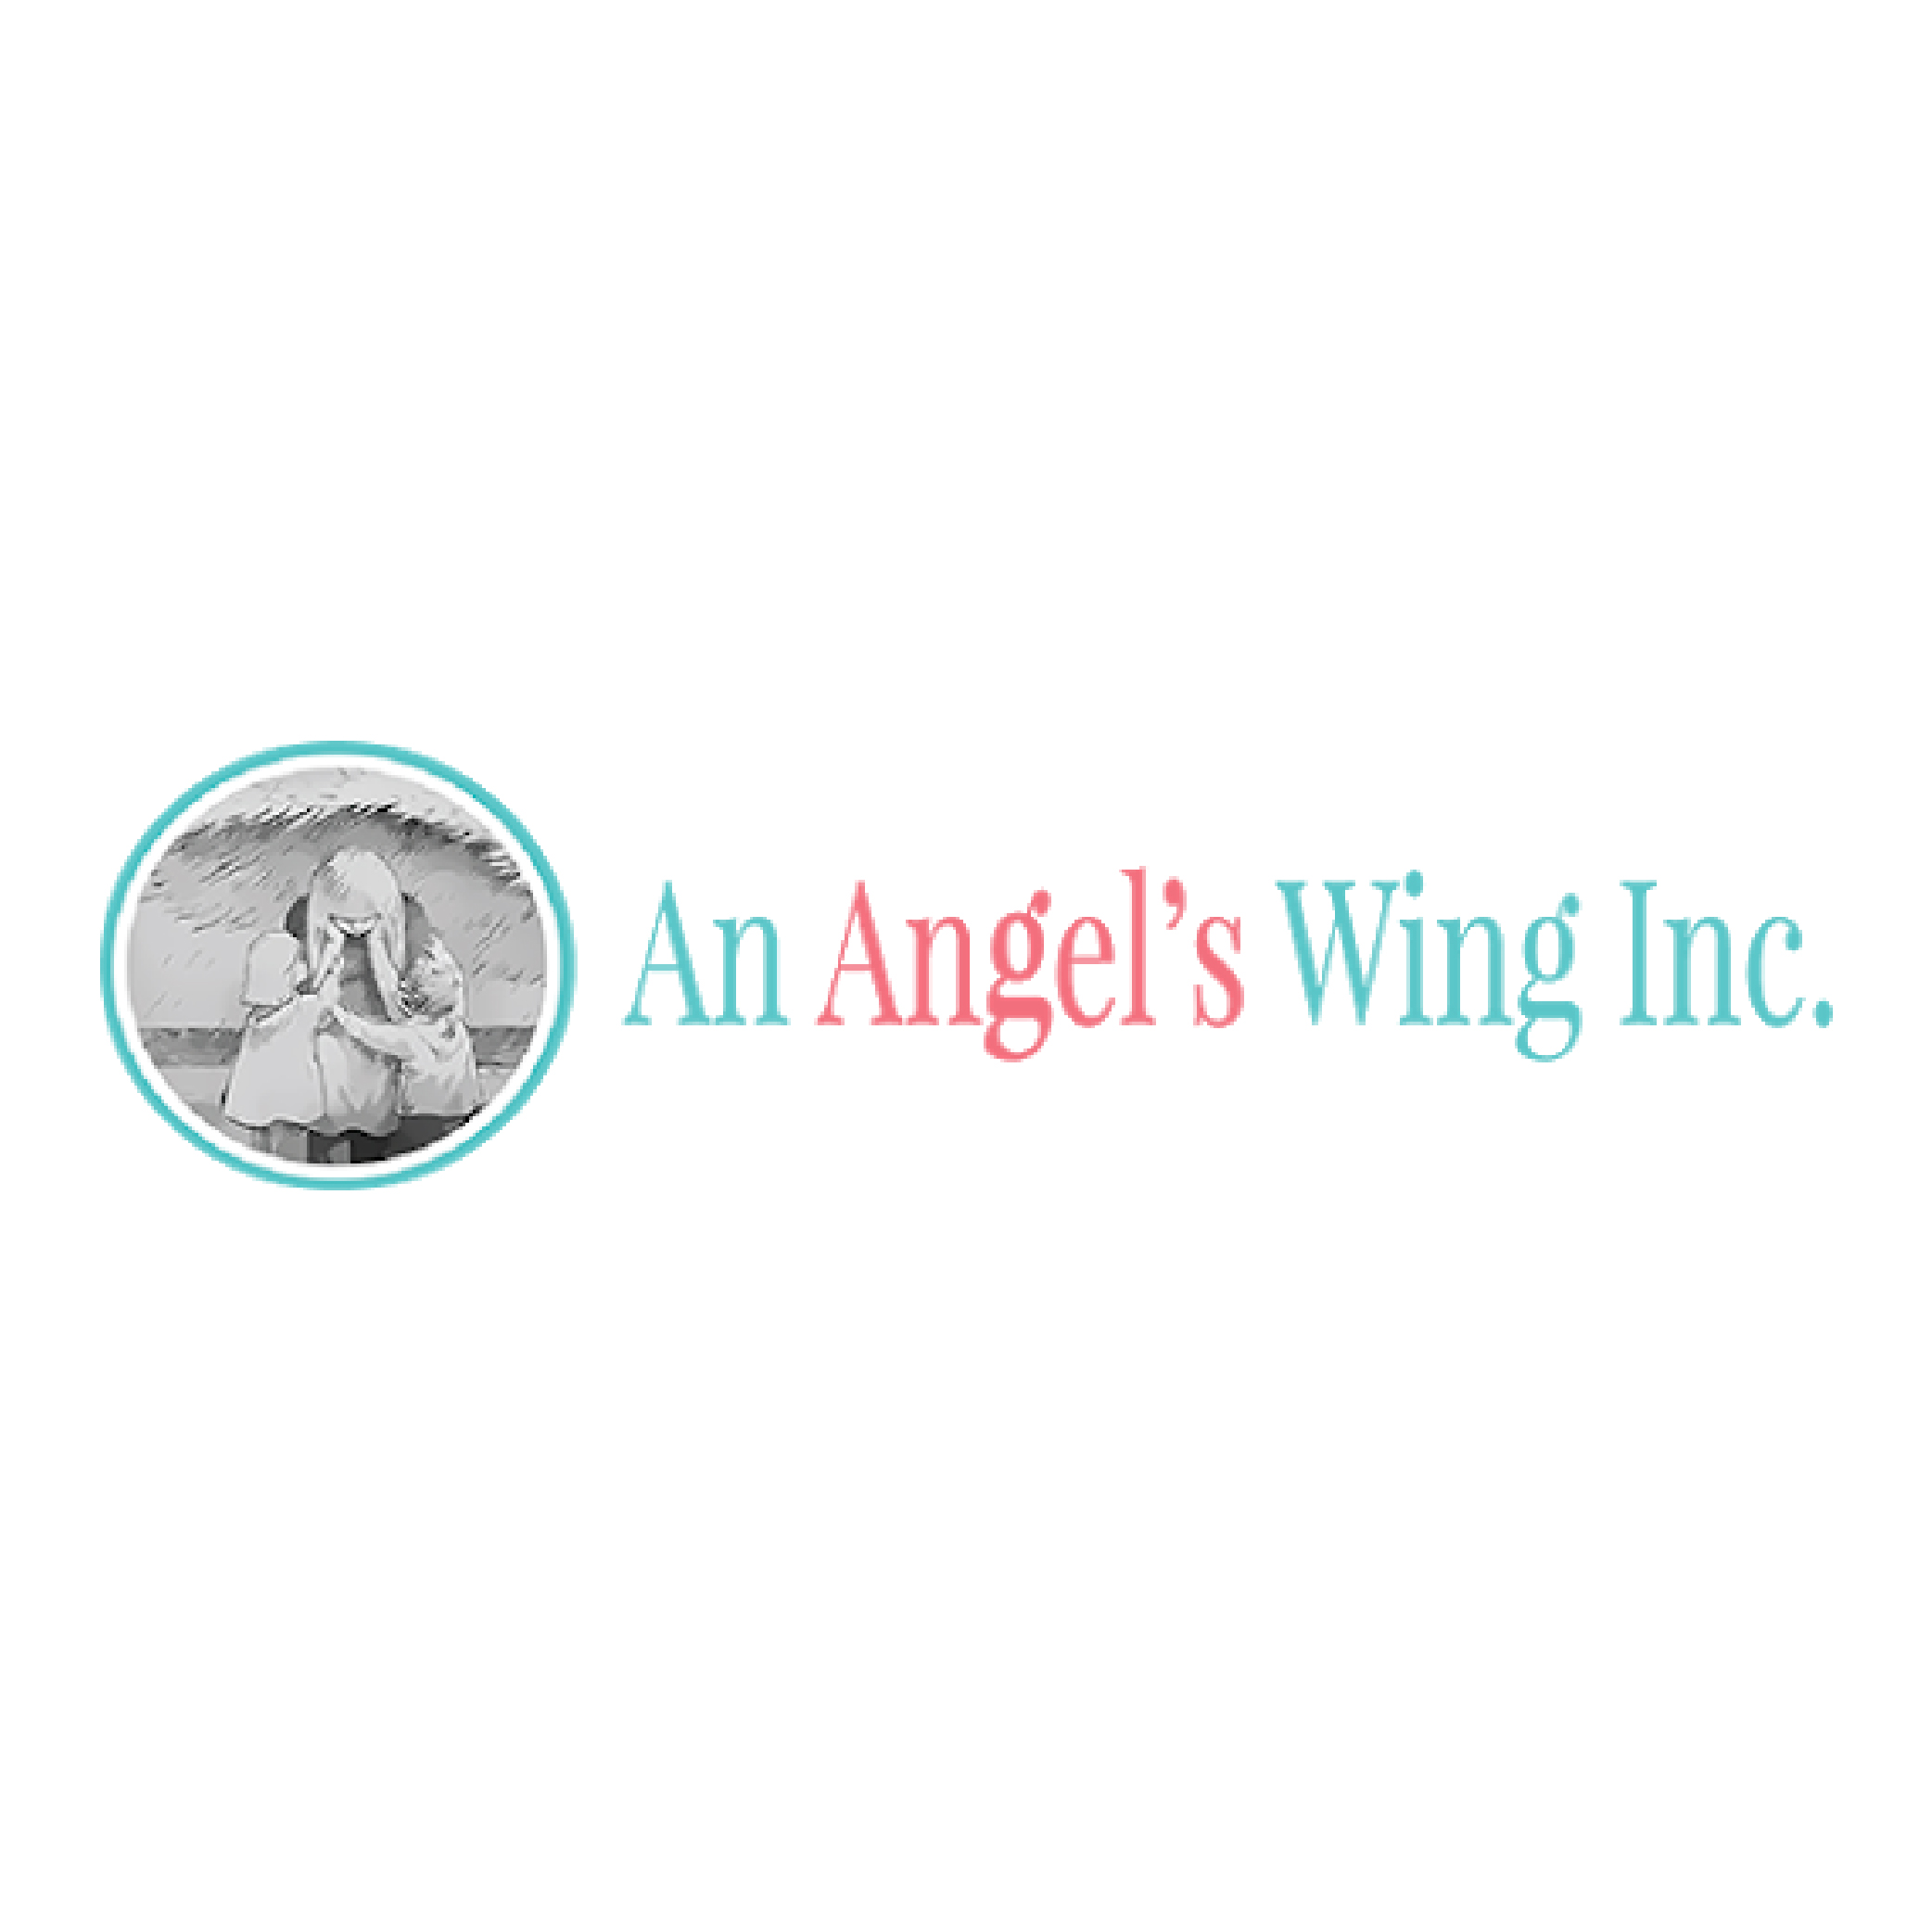 An Angel's Wing Inc logo